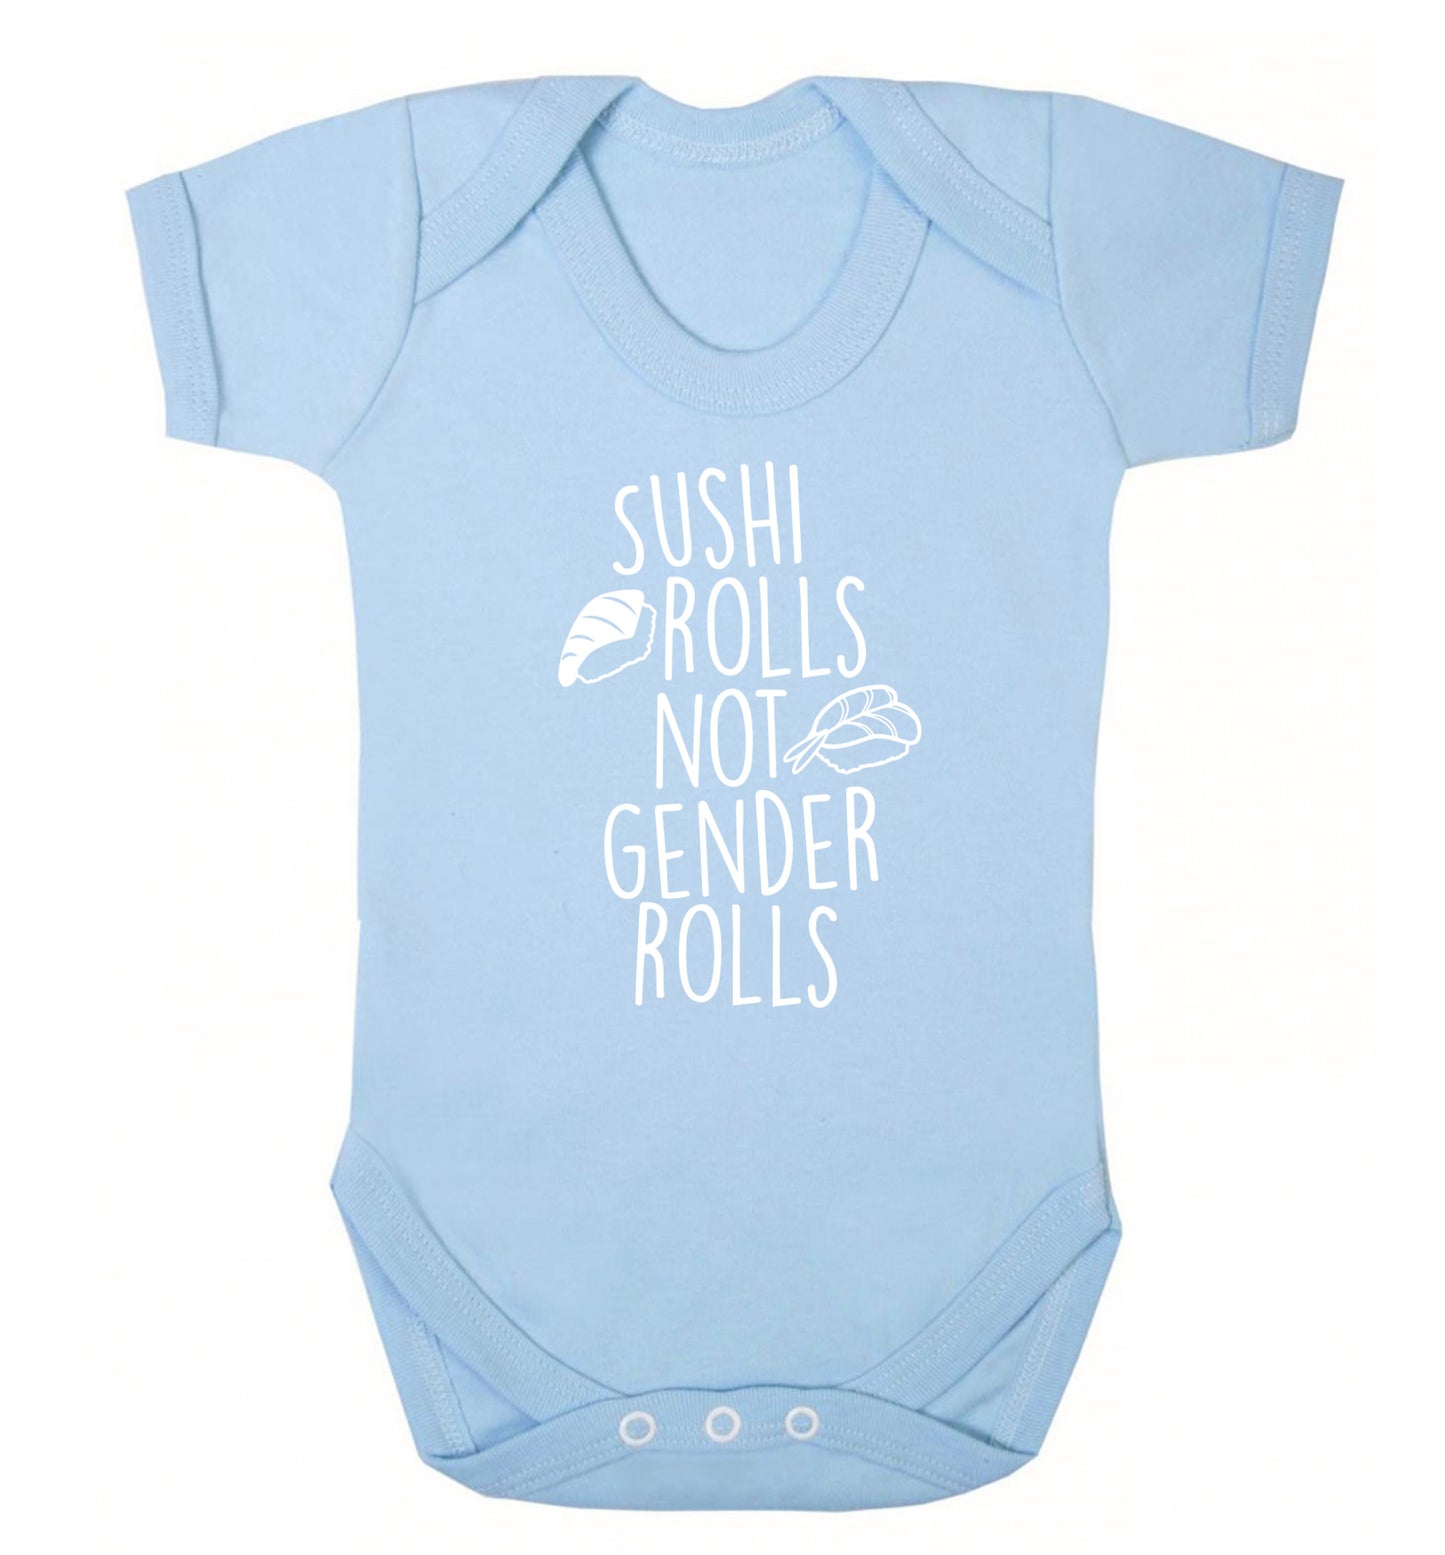 Sushi rolls not gender rolls Baby Vest pale blue 18-24 months